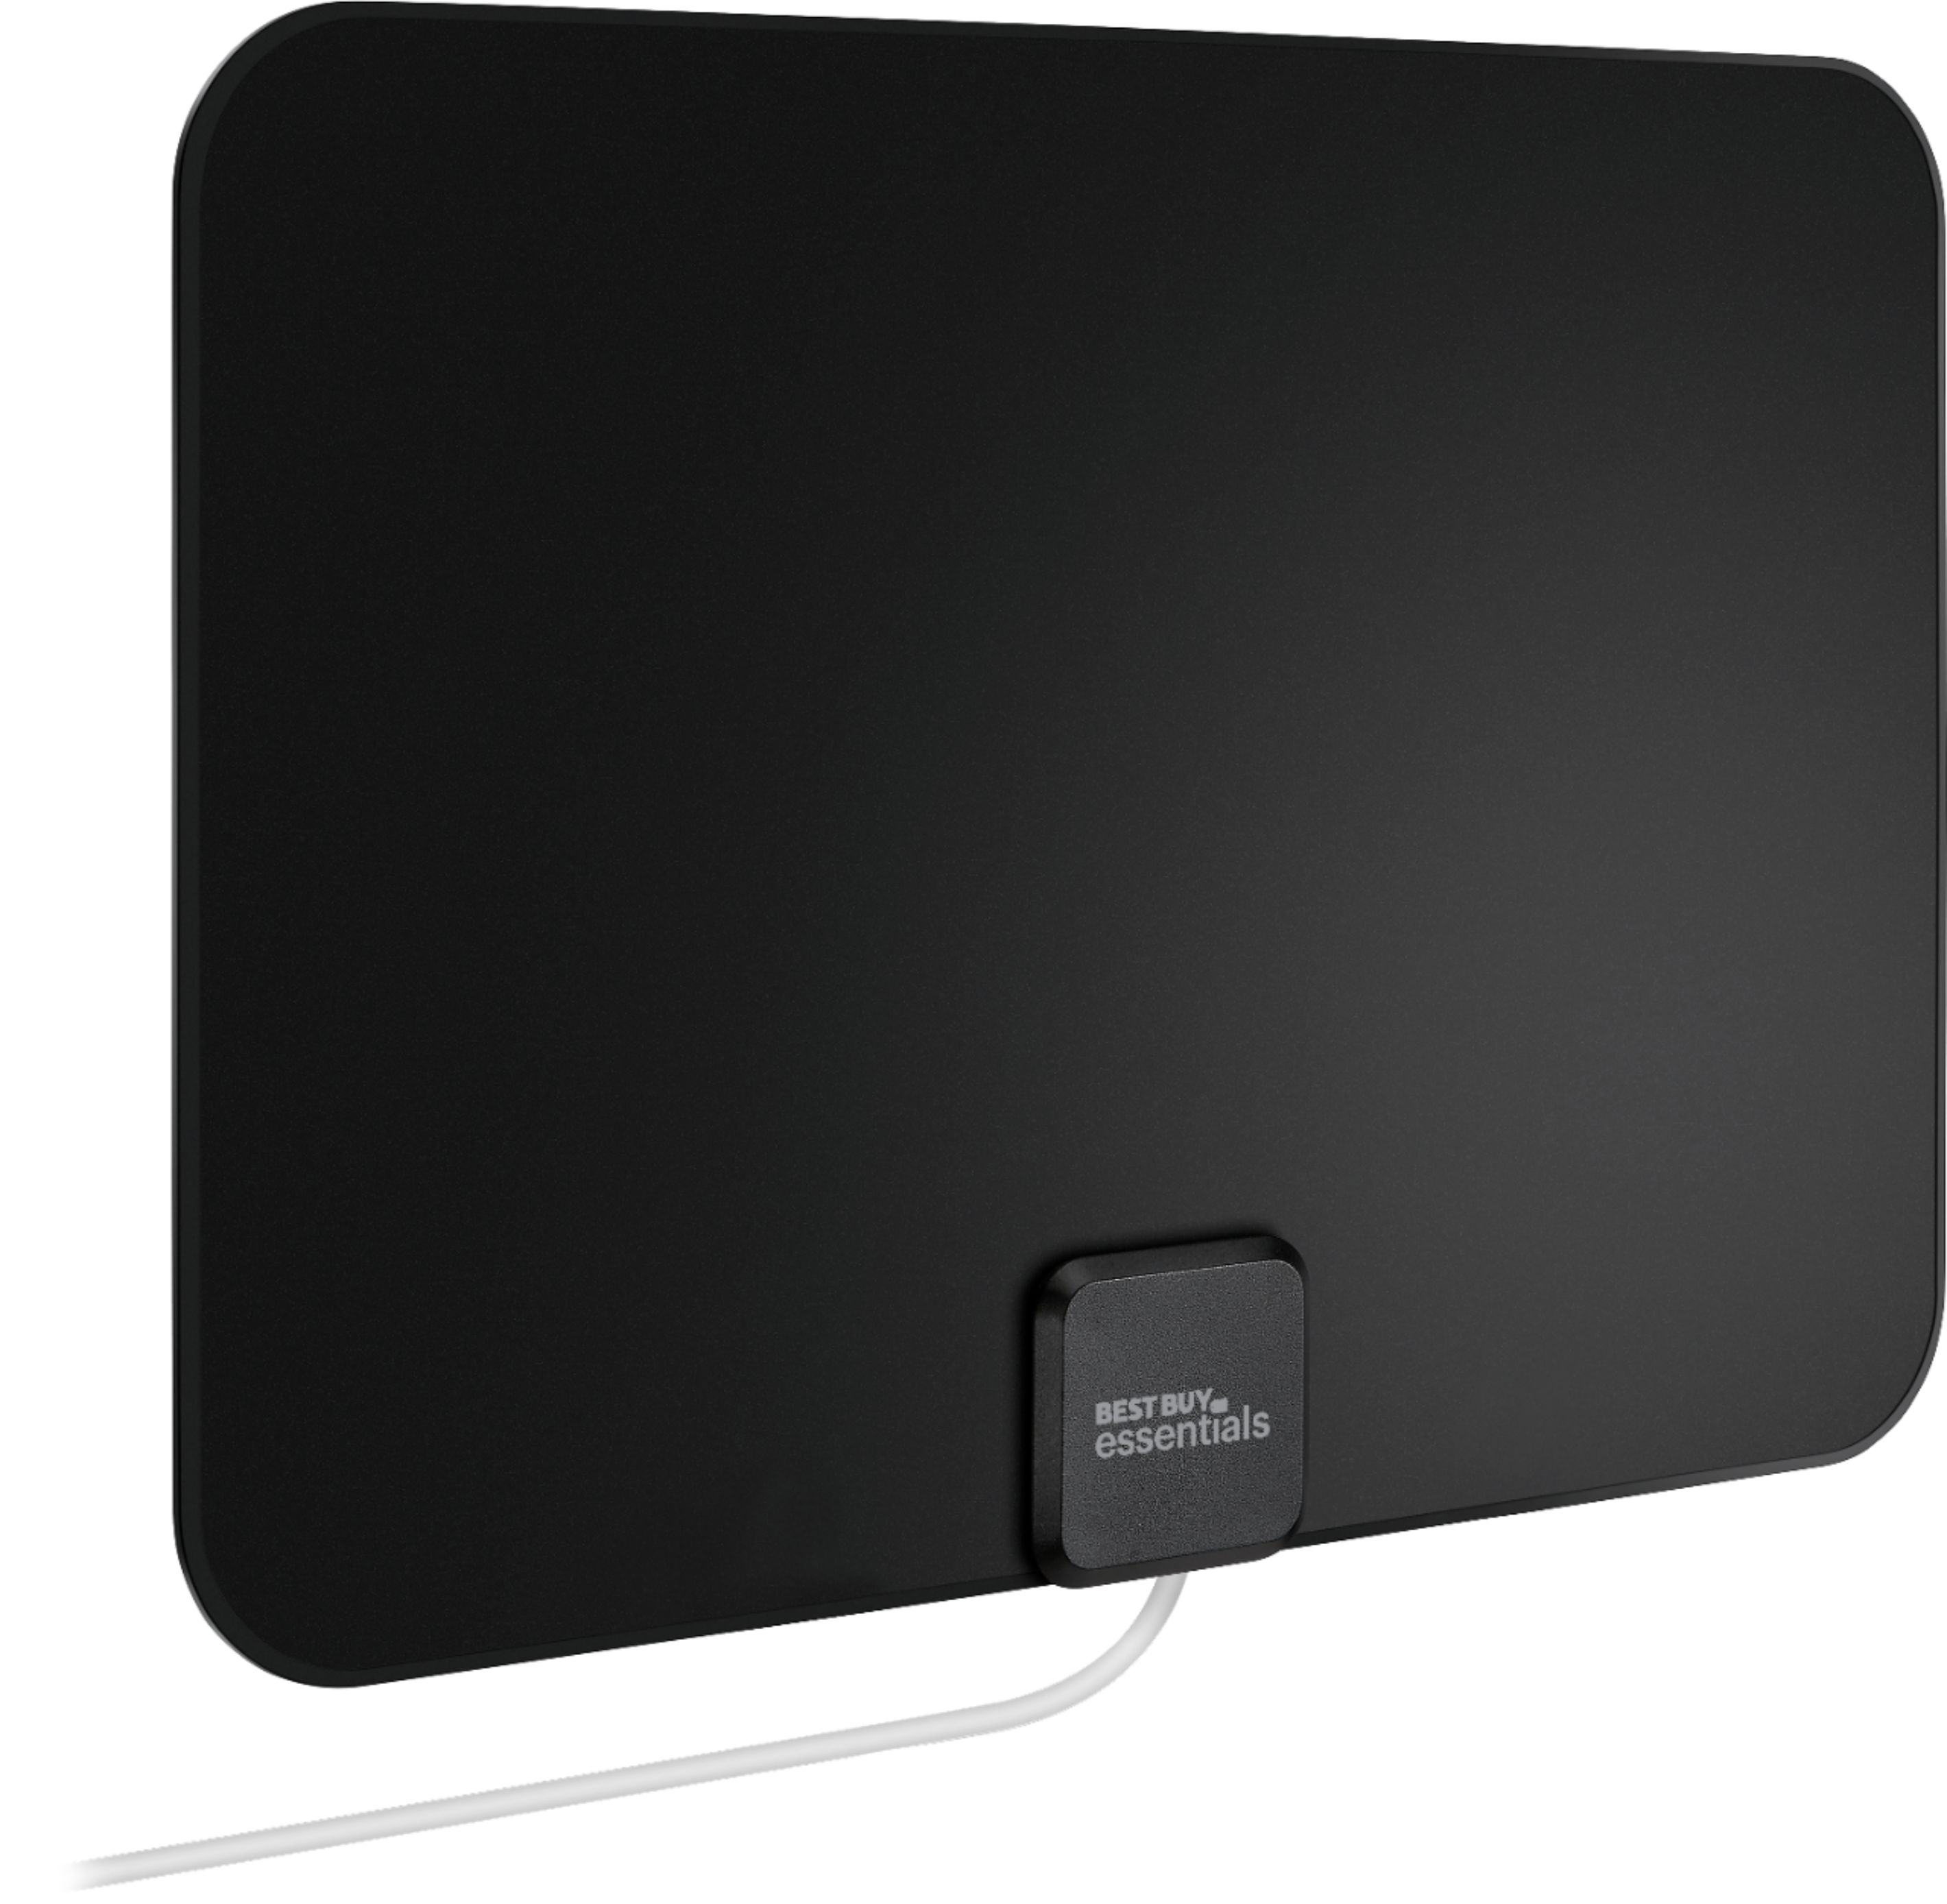 Angle View: Best Buy essentials™ - Thin Indoor HDTV Antenna - 35 Mile Range - Black/White